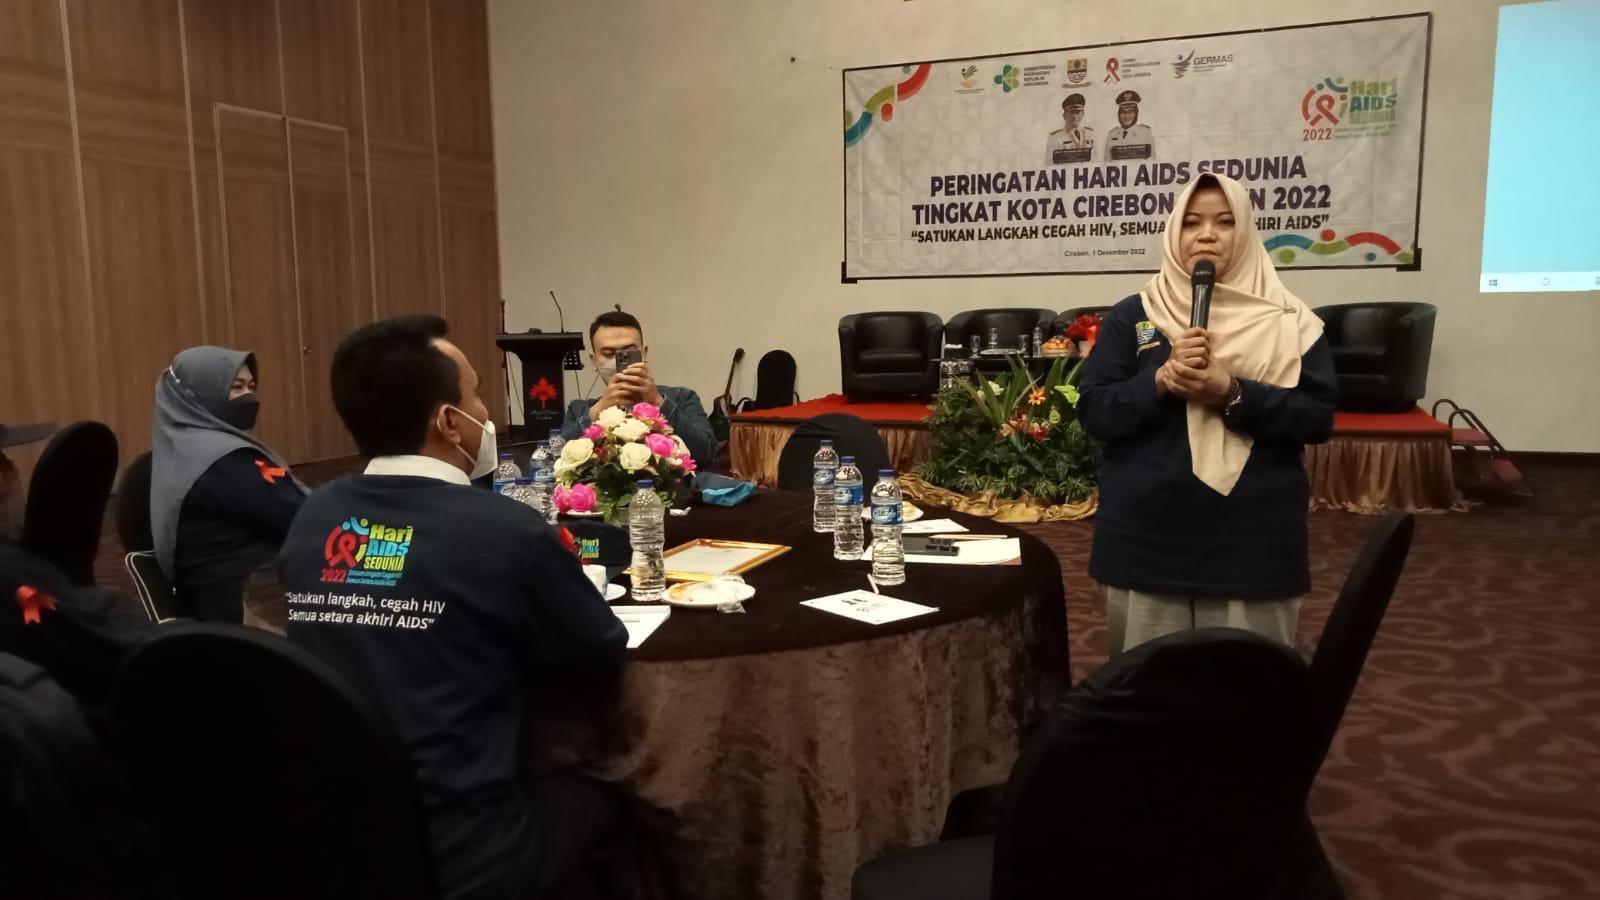 Miris! Kasus HIV-AIDS di Kota Cirebon Meningkat, KPA Bakal Gencar Lakukan Ini